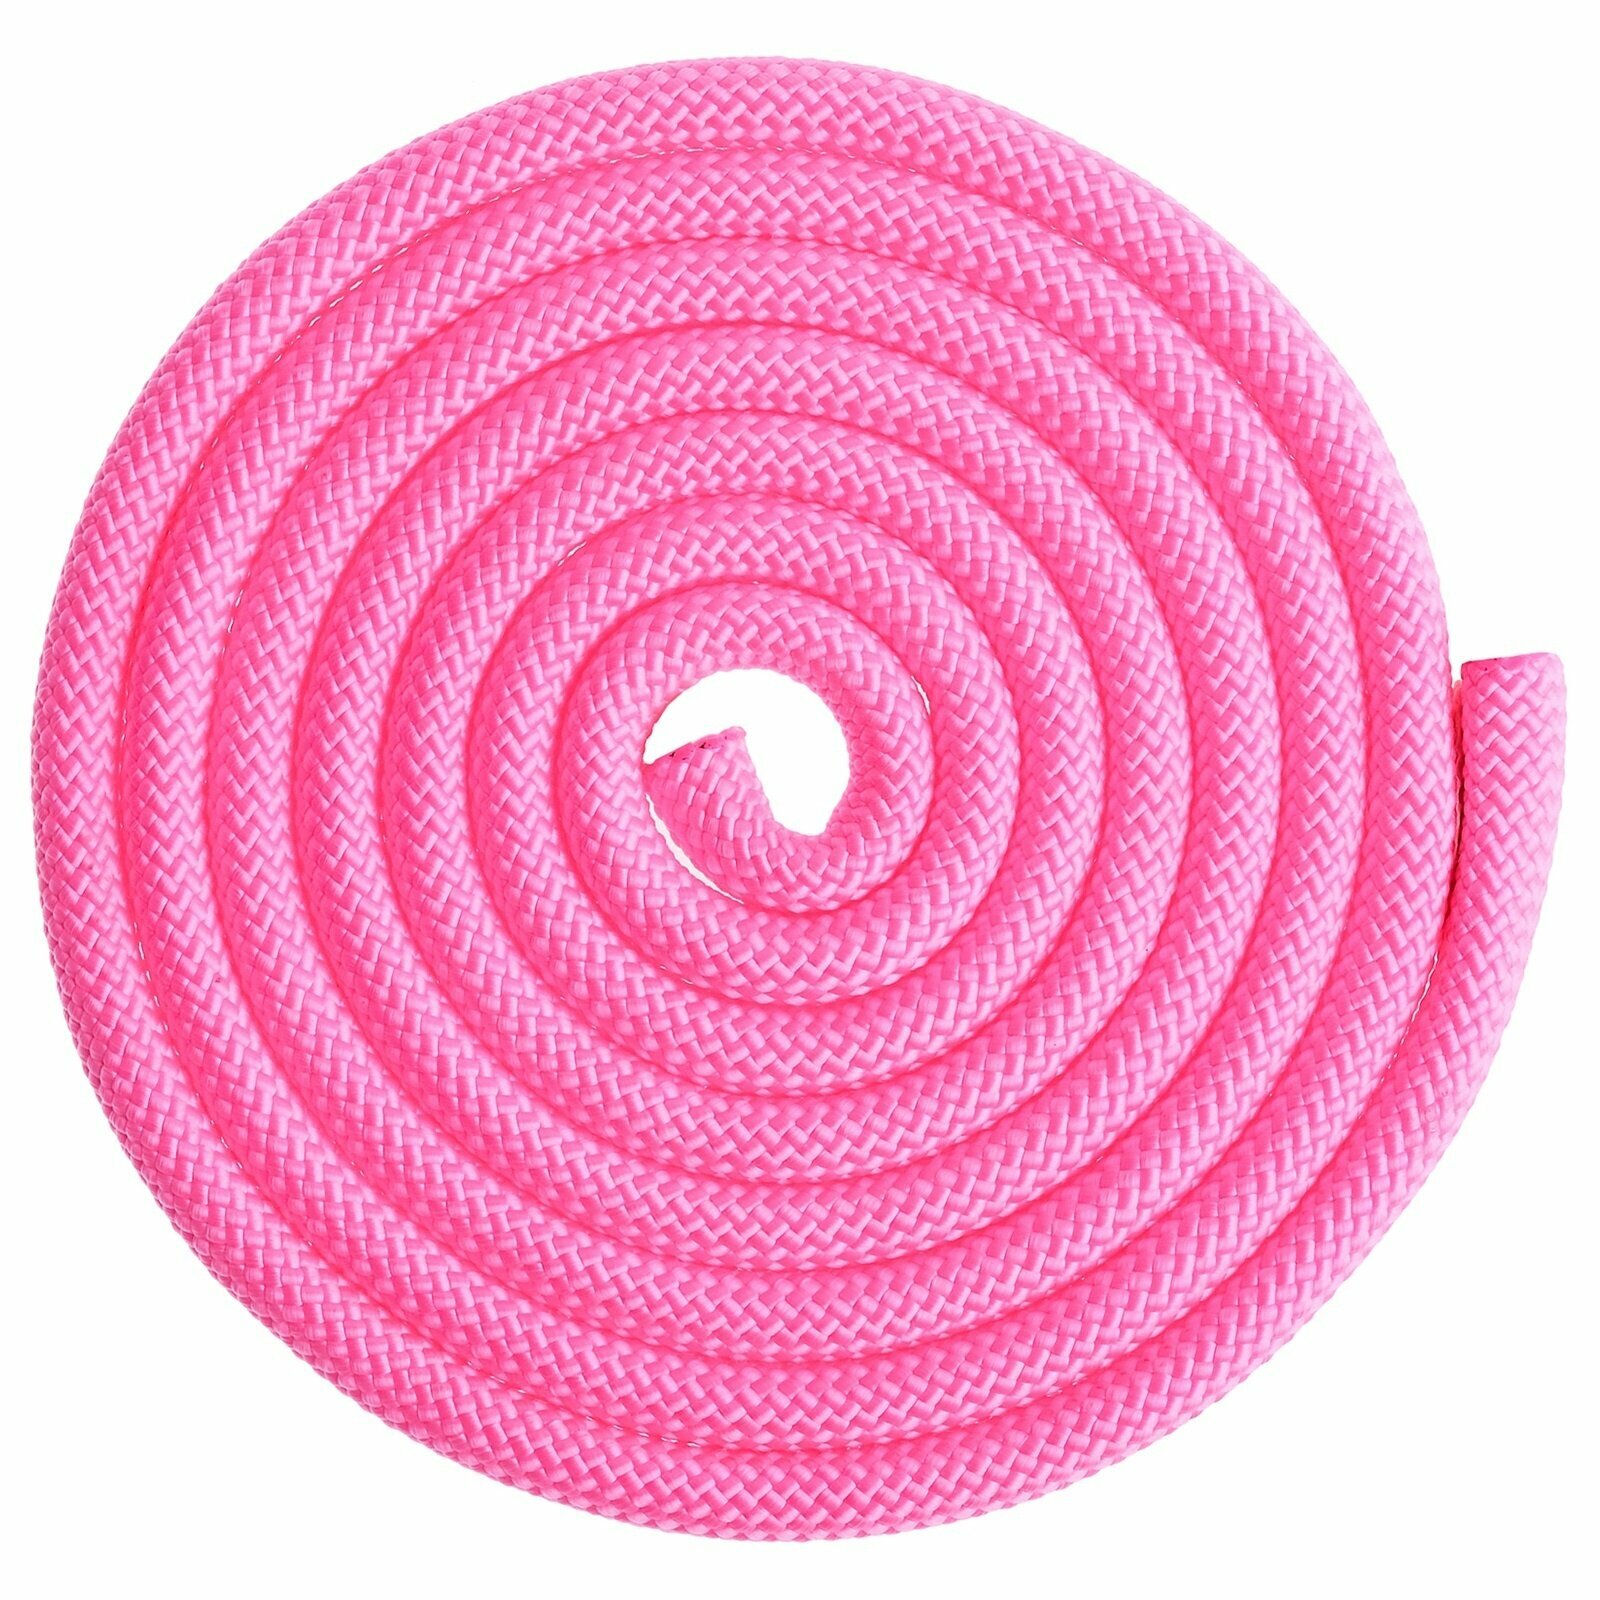 Скакалка гимнастическая Grace Dance утяжеленная, 3 м, 180 г, цвет неон розовый